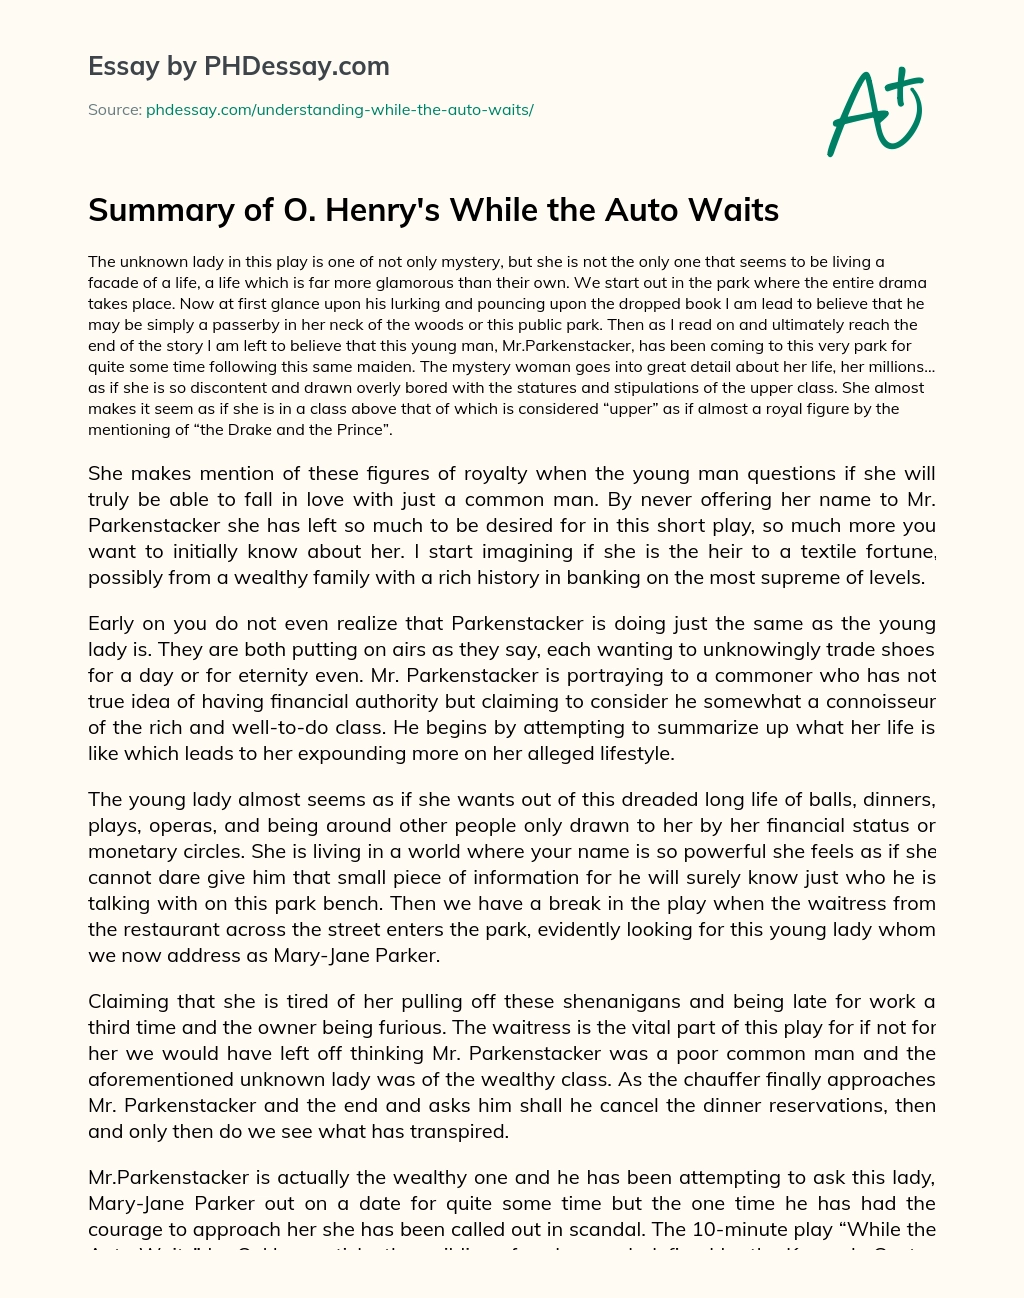 Summary of O. Henry’s While the Auto Waits essay